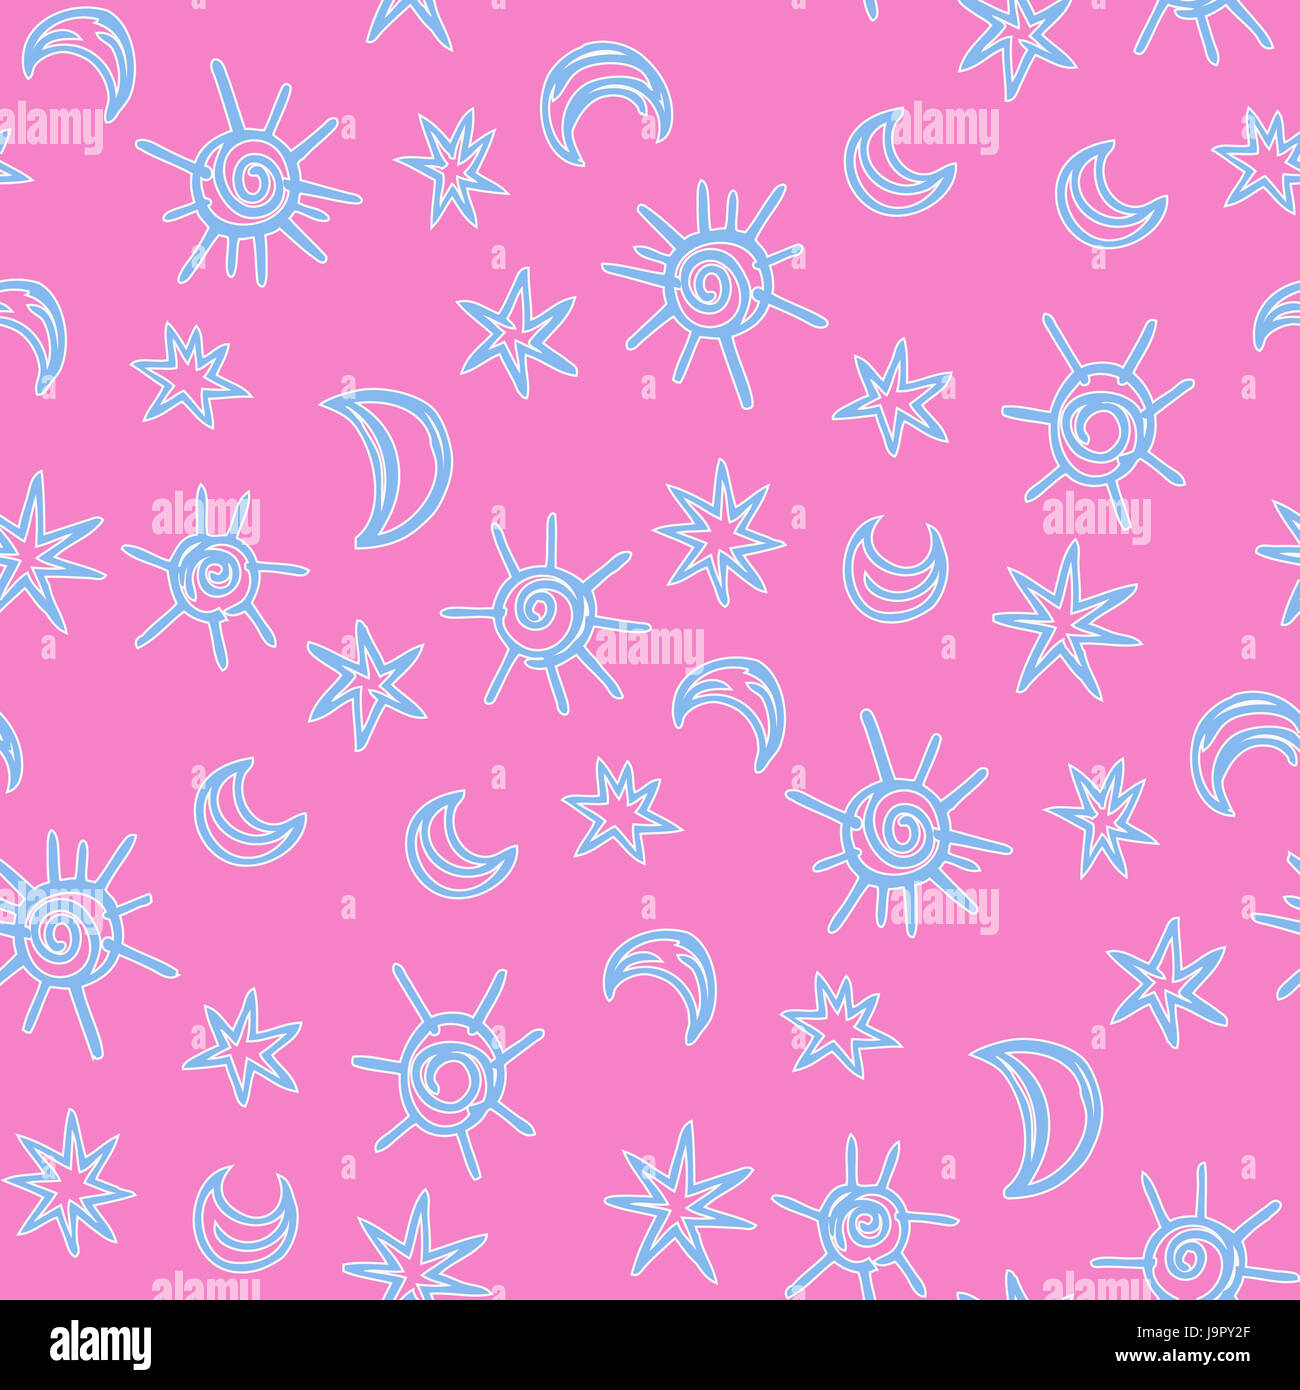 Seamless pink celestial pattern Stock Photo